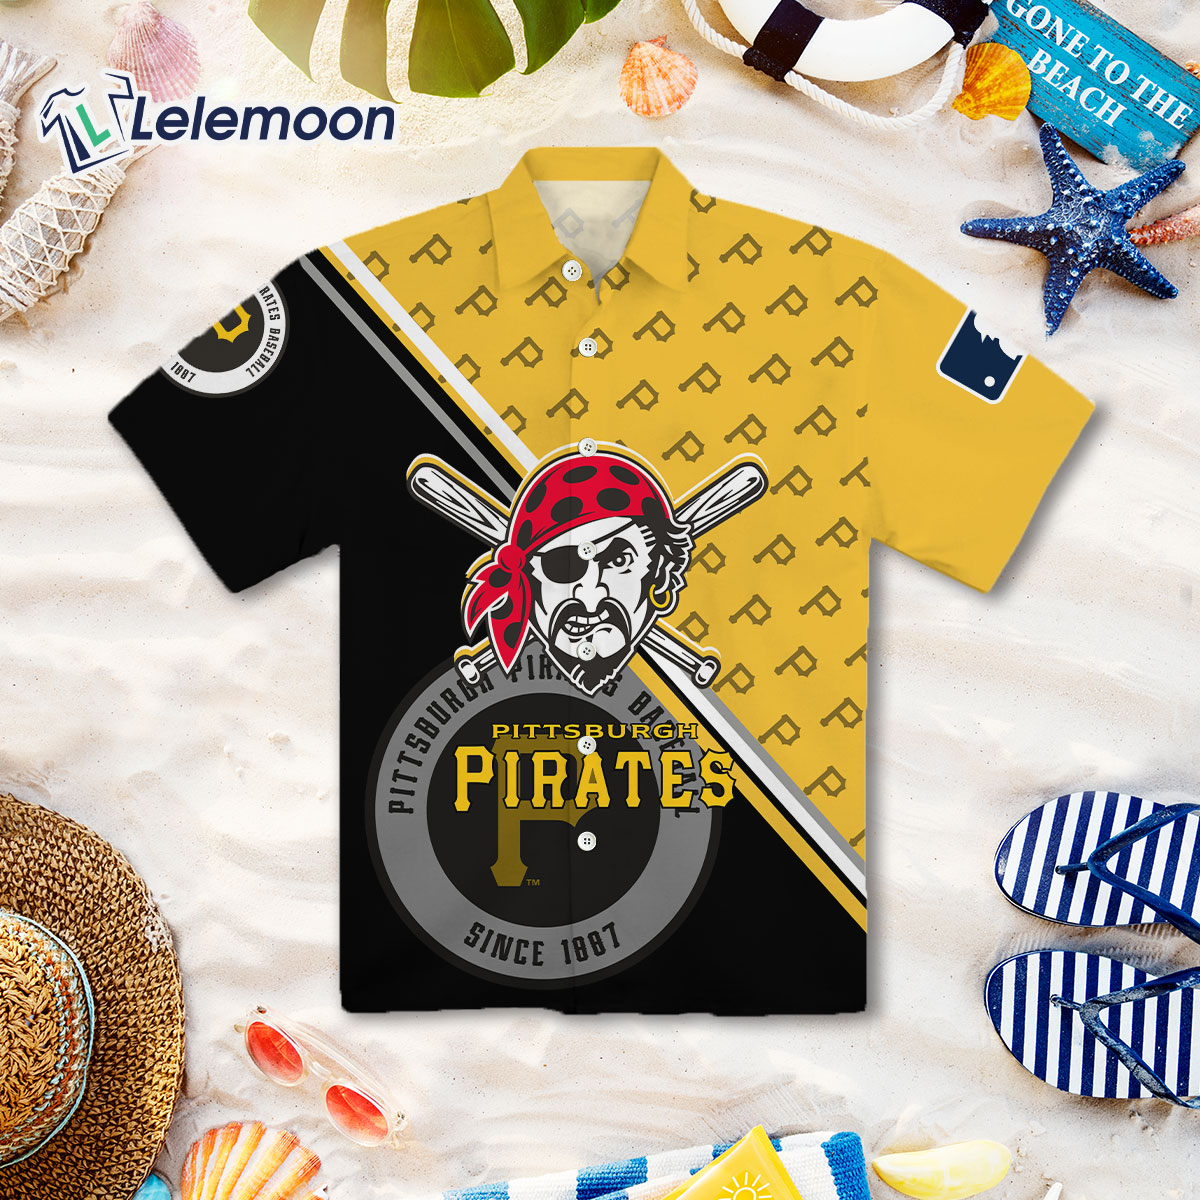 Pittsburgh Pirates, Shirts